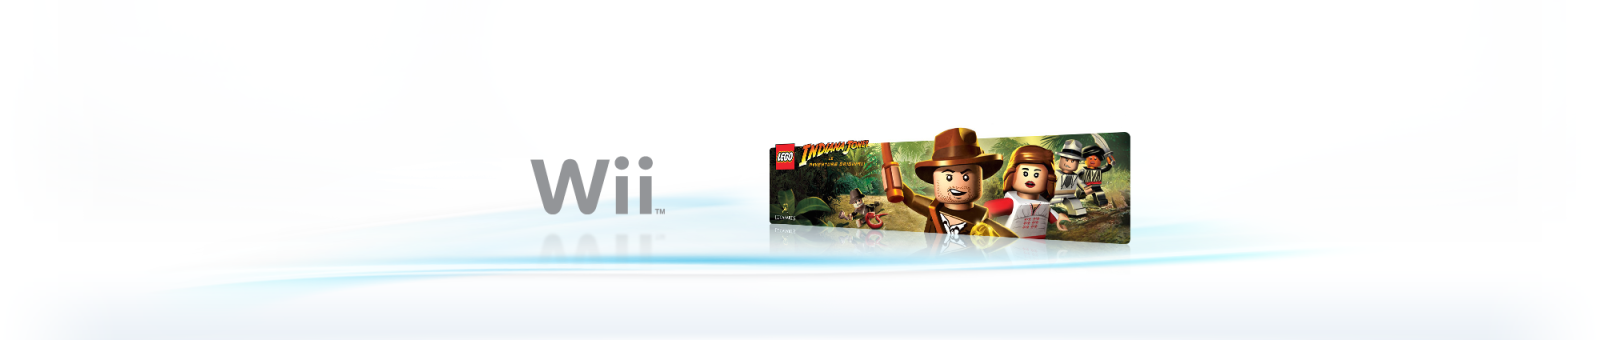 LEGO Indiana Jones: Le Avventure Originali